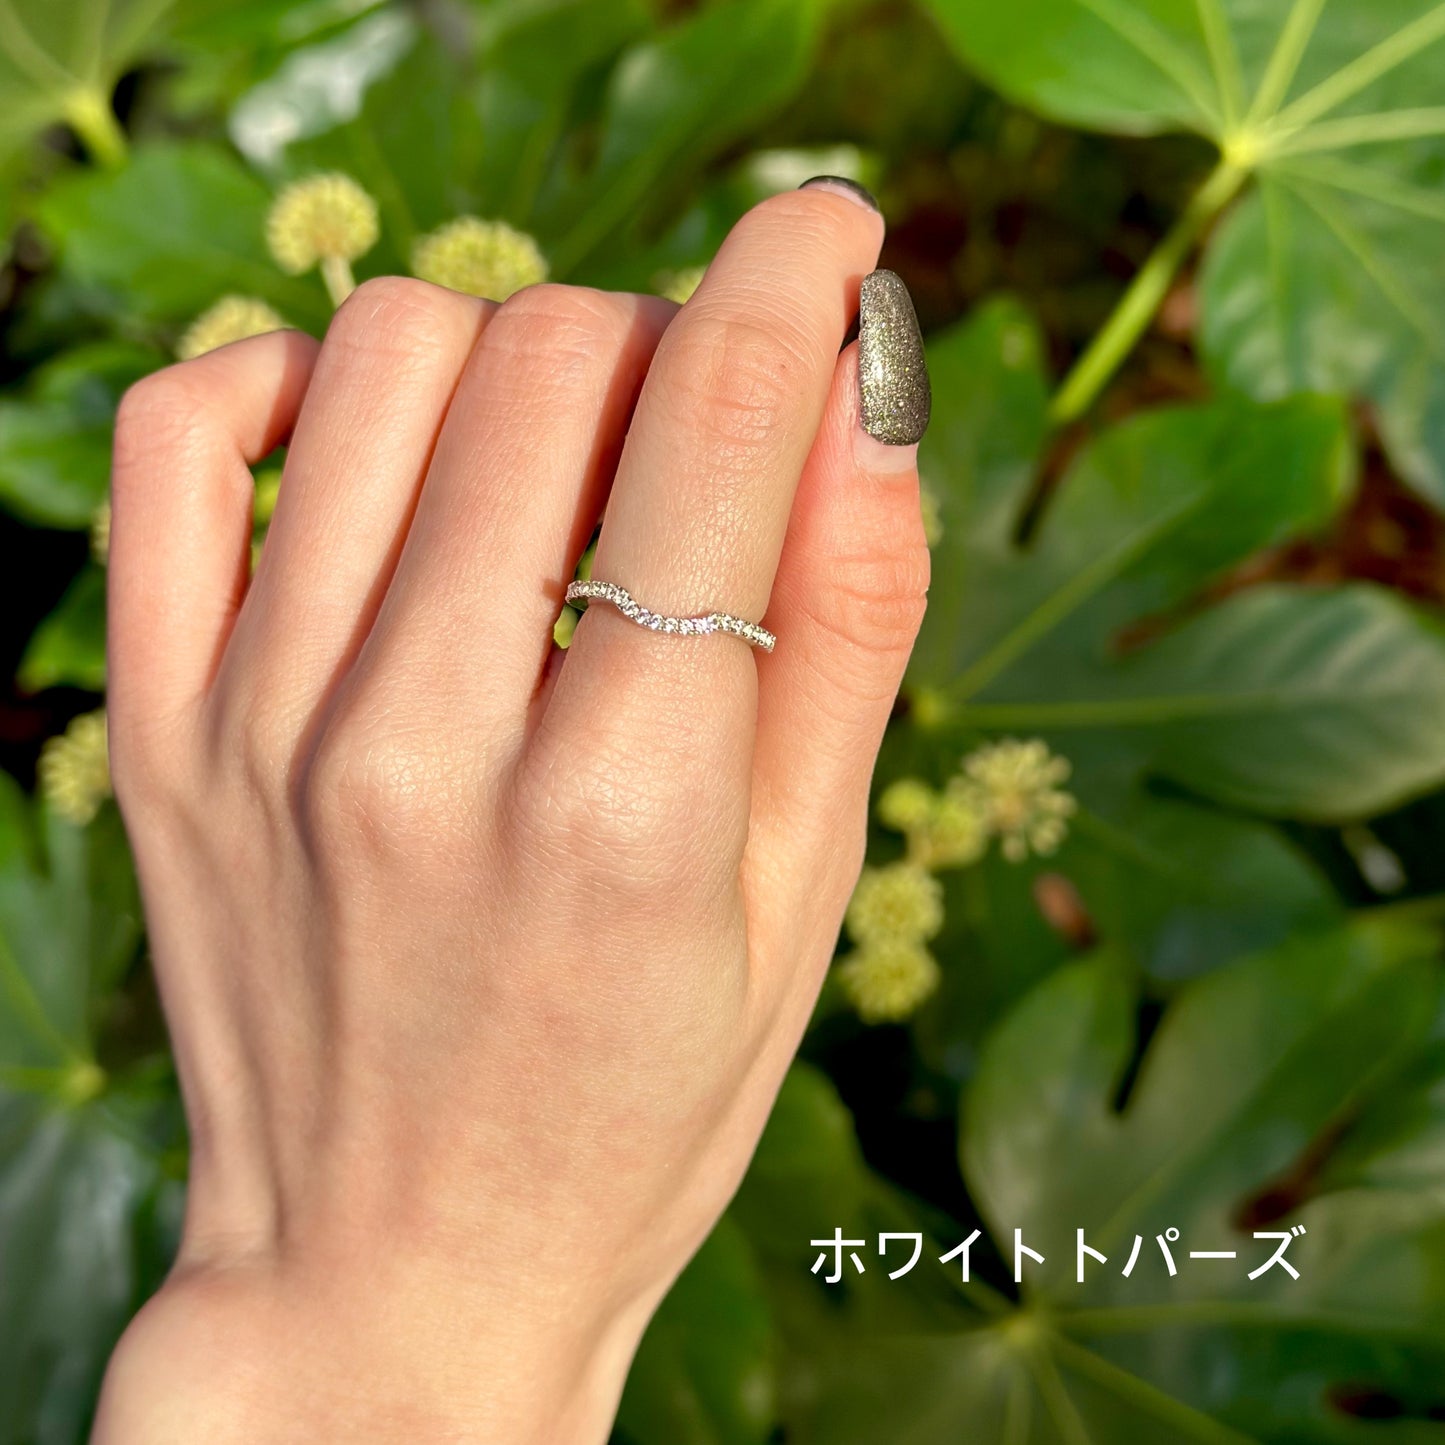 【Biju mam poco】Stone simple ring 2